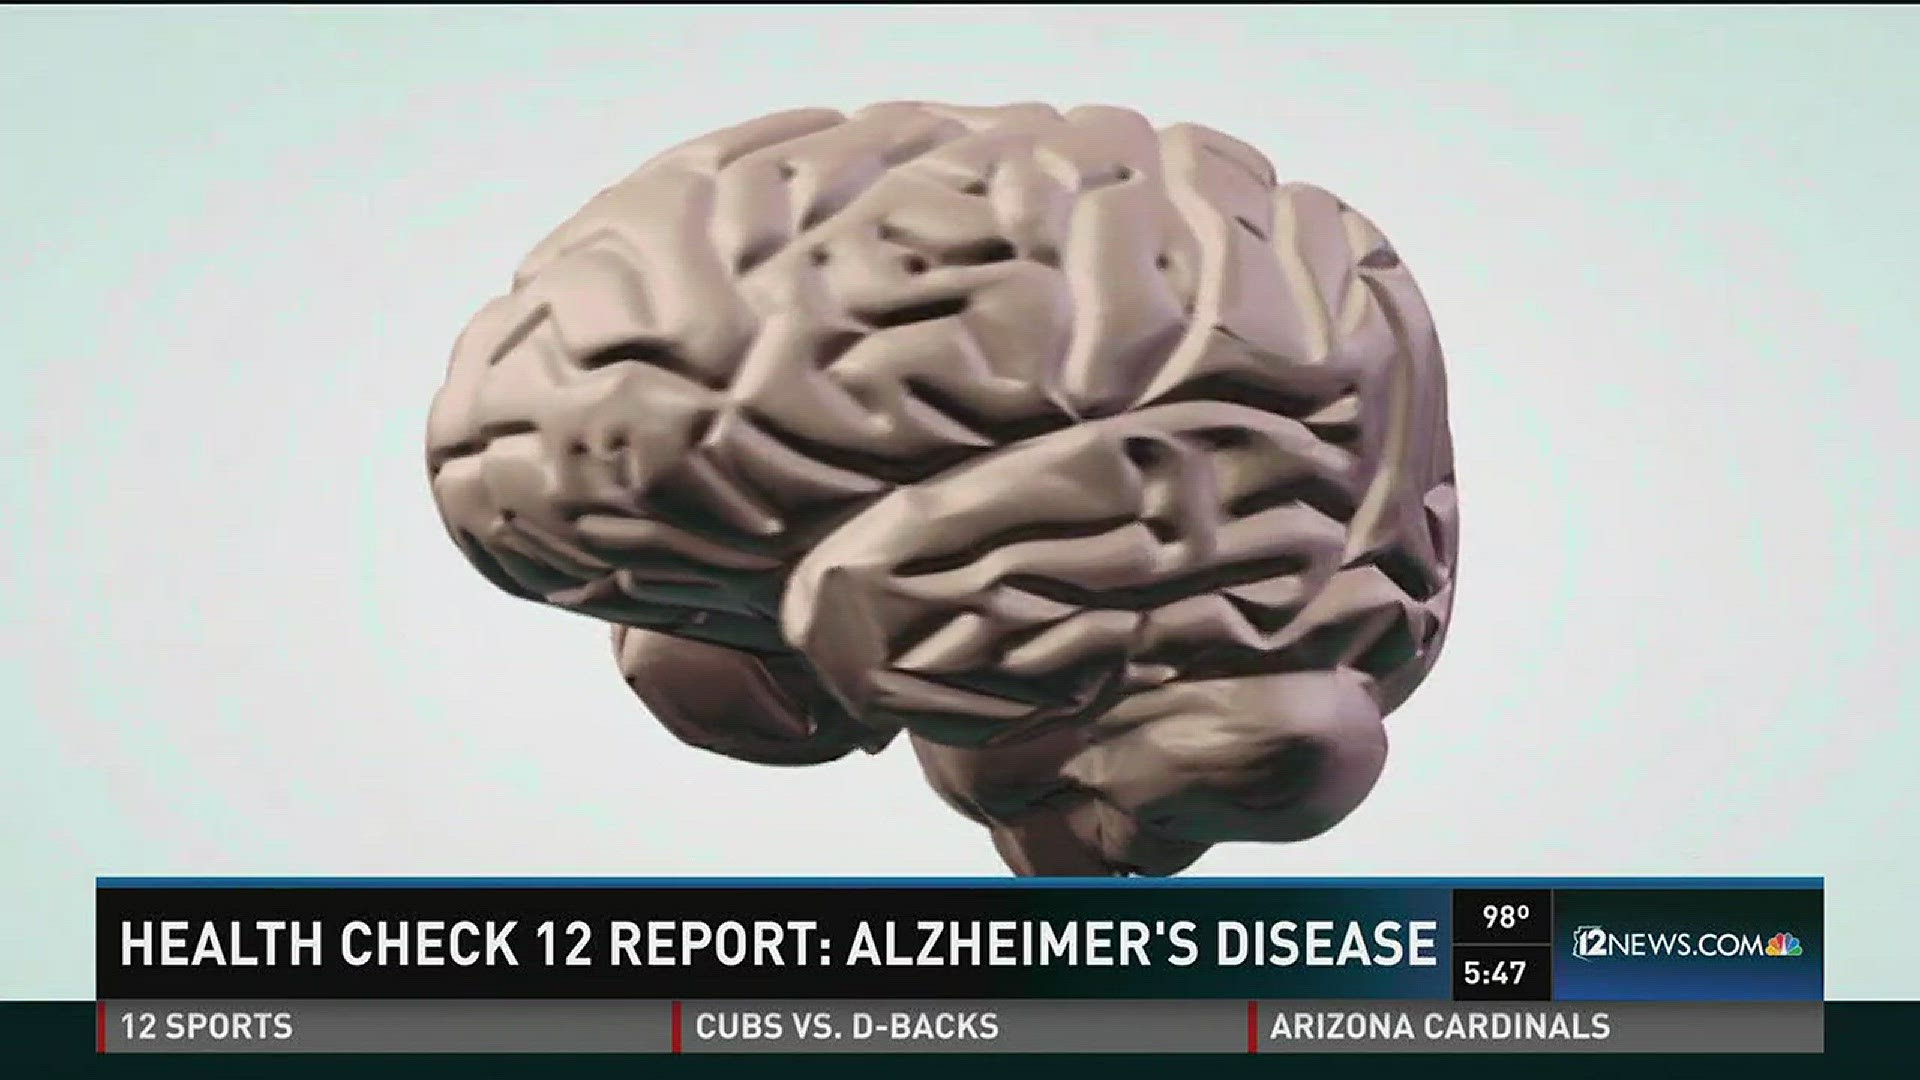 Health Check 12 Report: Alzheimer's Disease